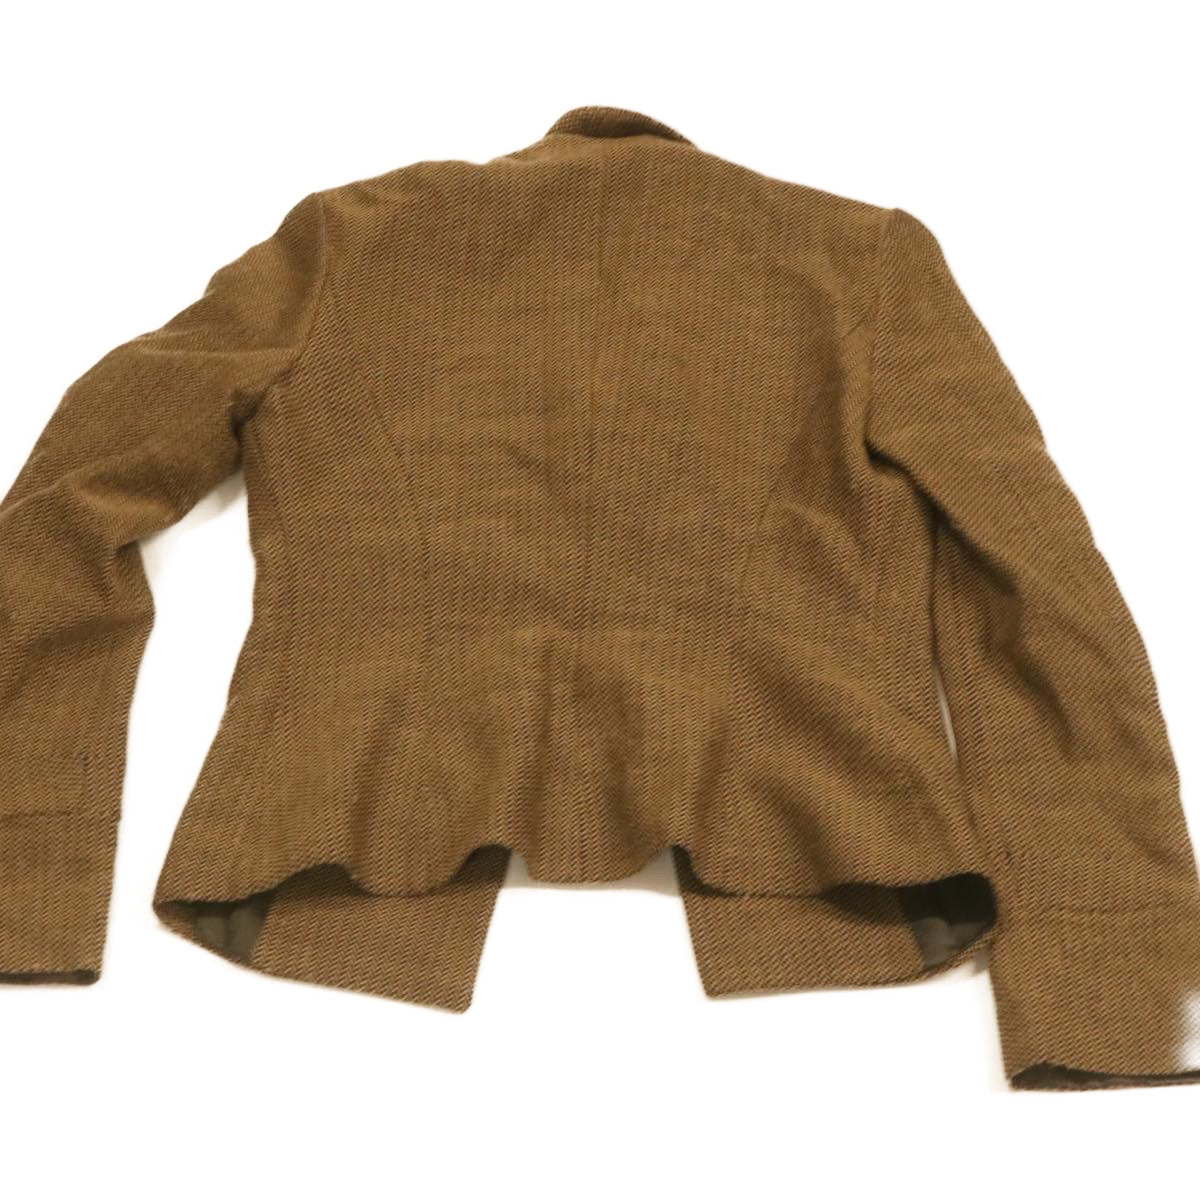 Salvatore Ferragamo sweater Pants Jacket 4Set Auth ar6280